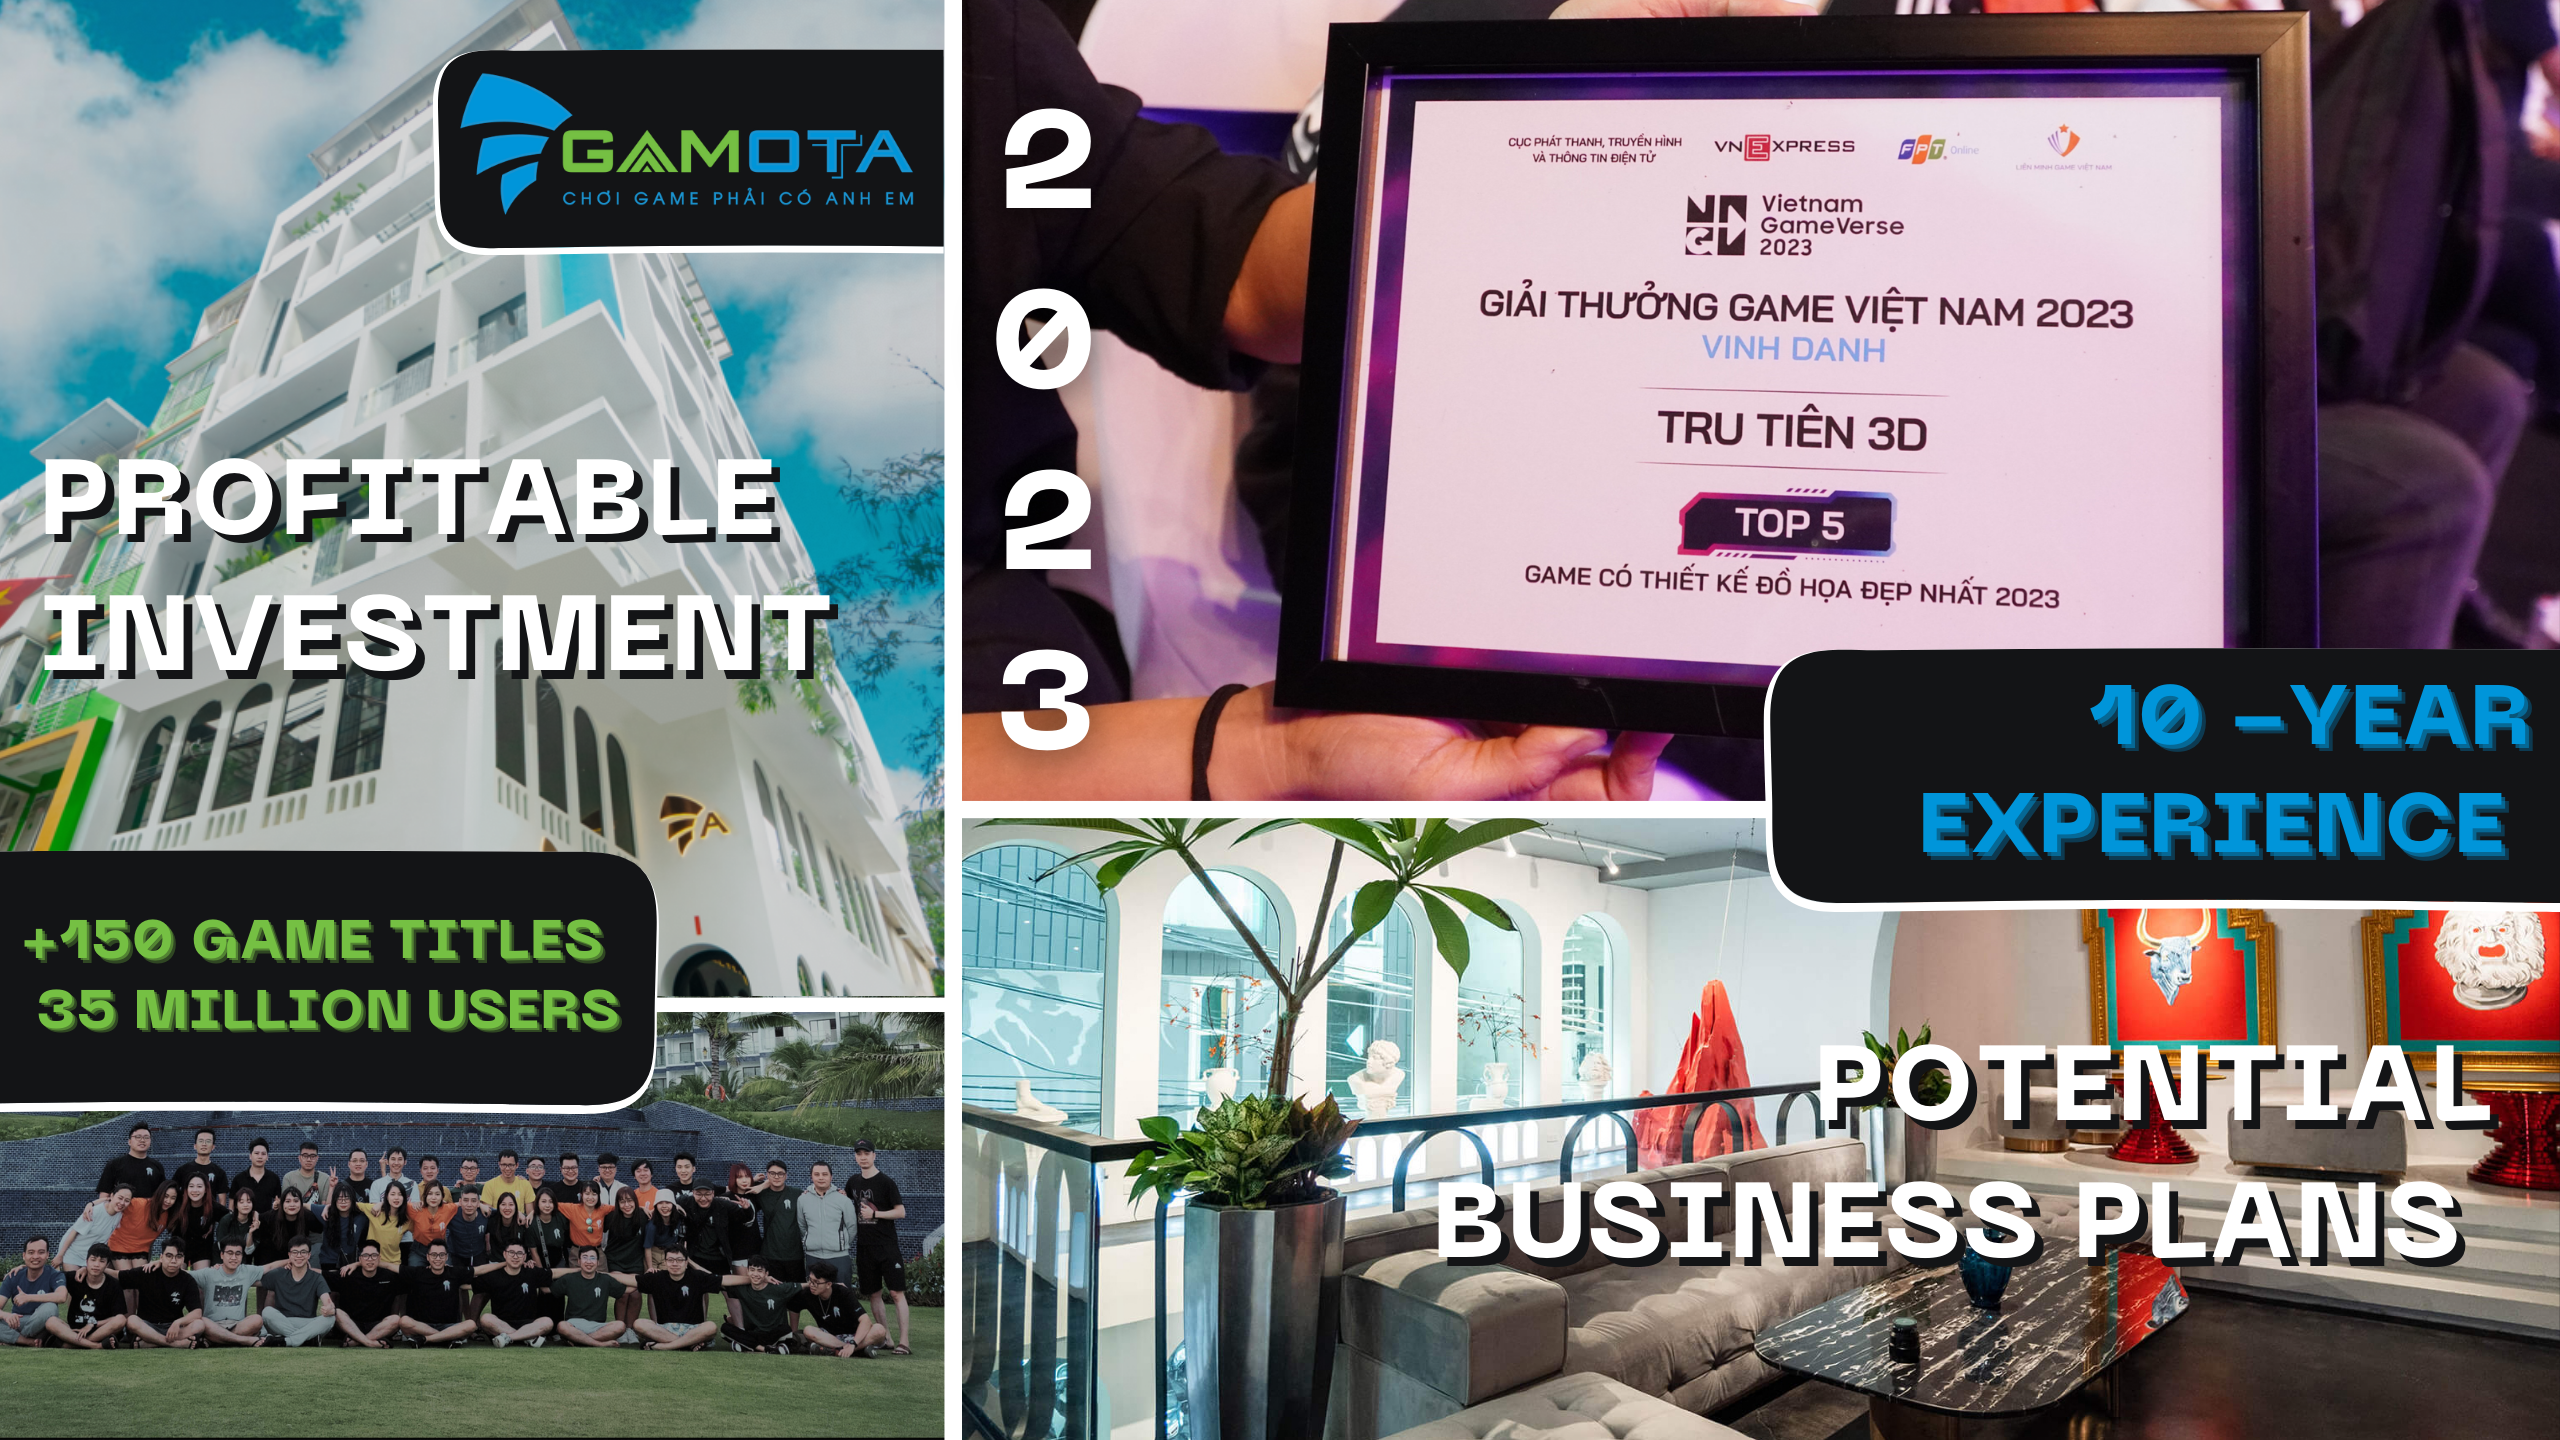 Gamota - profitable business plans in 2023